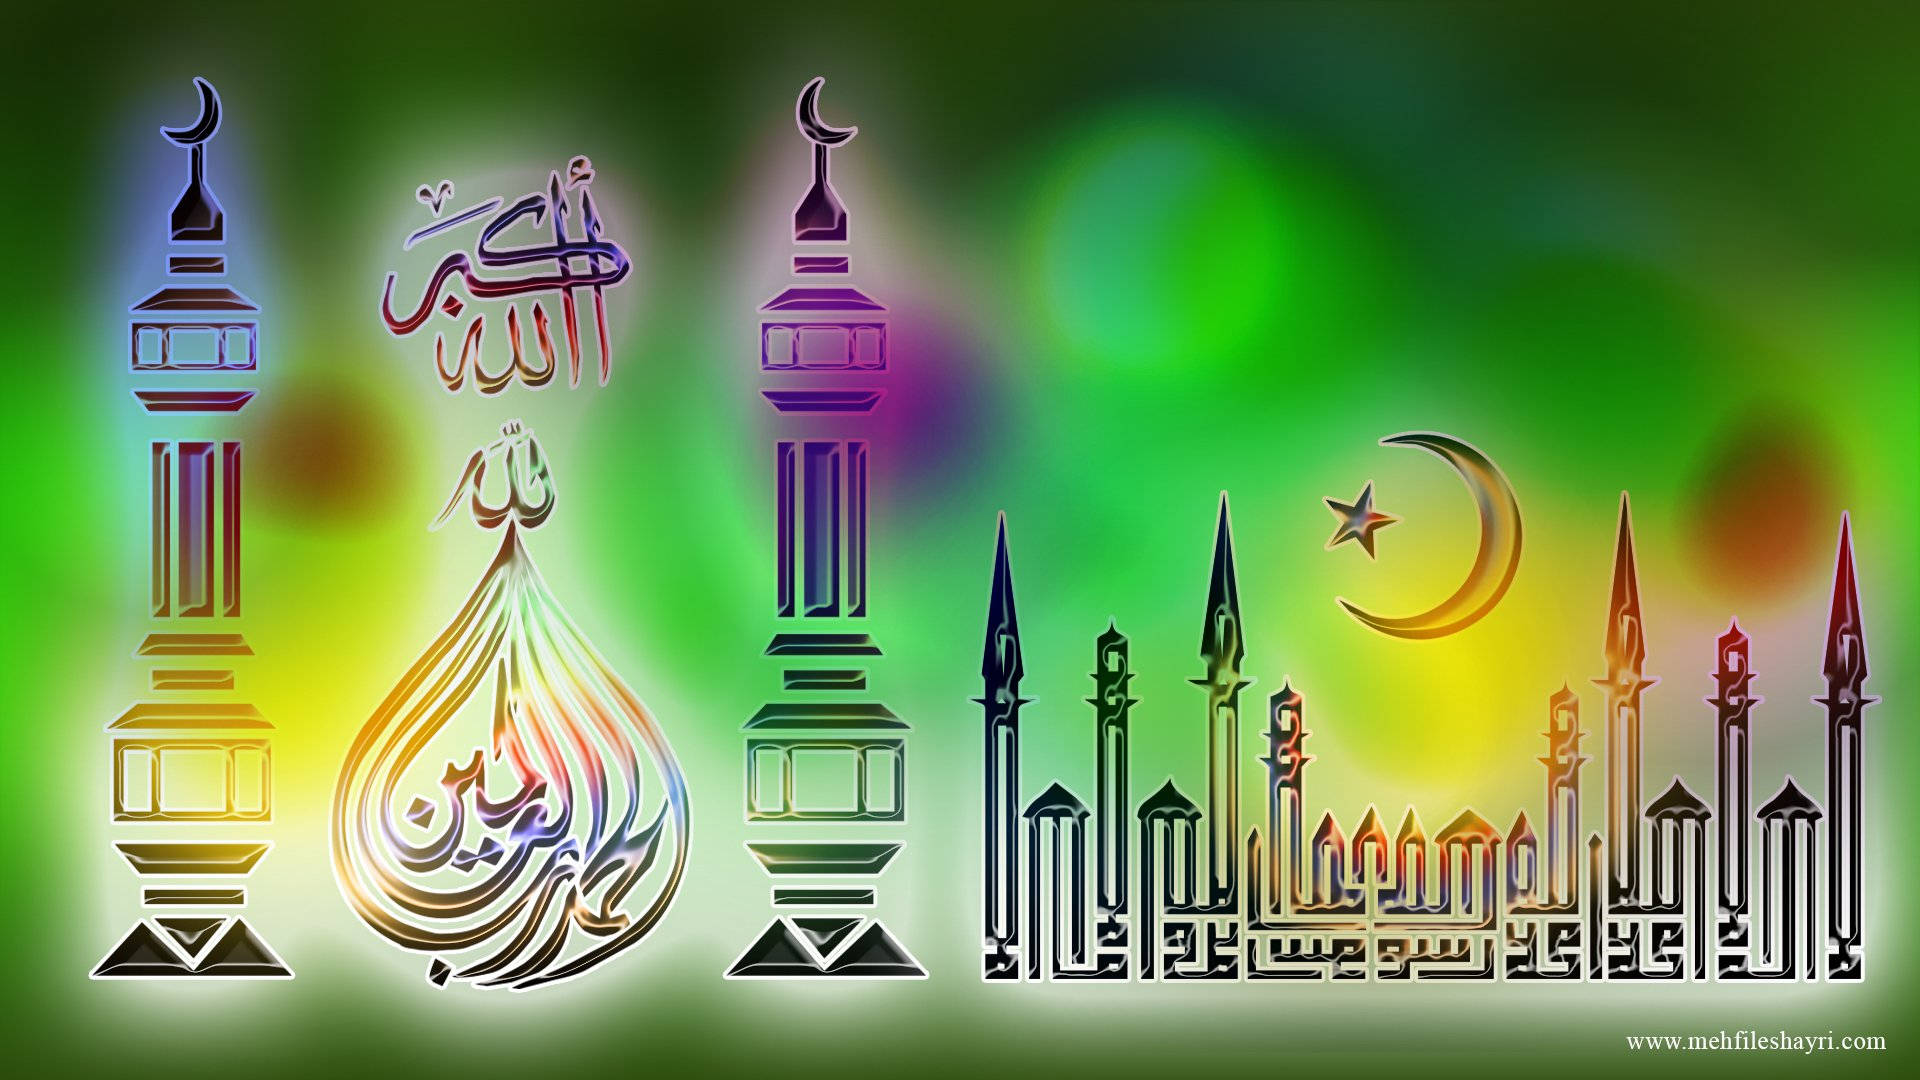 Hd Digital Islamic Art Background